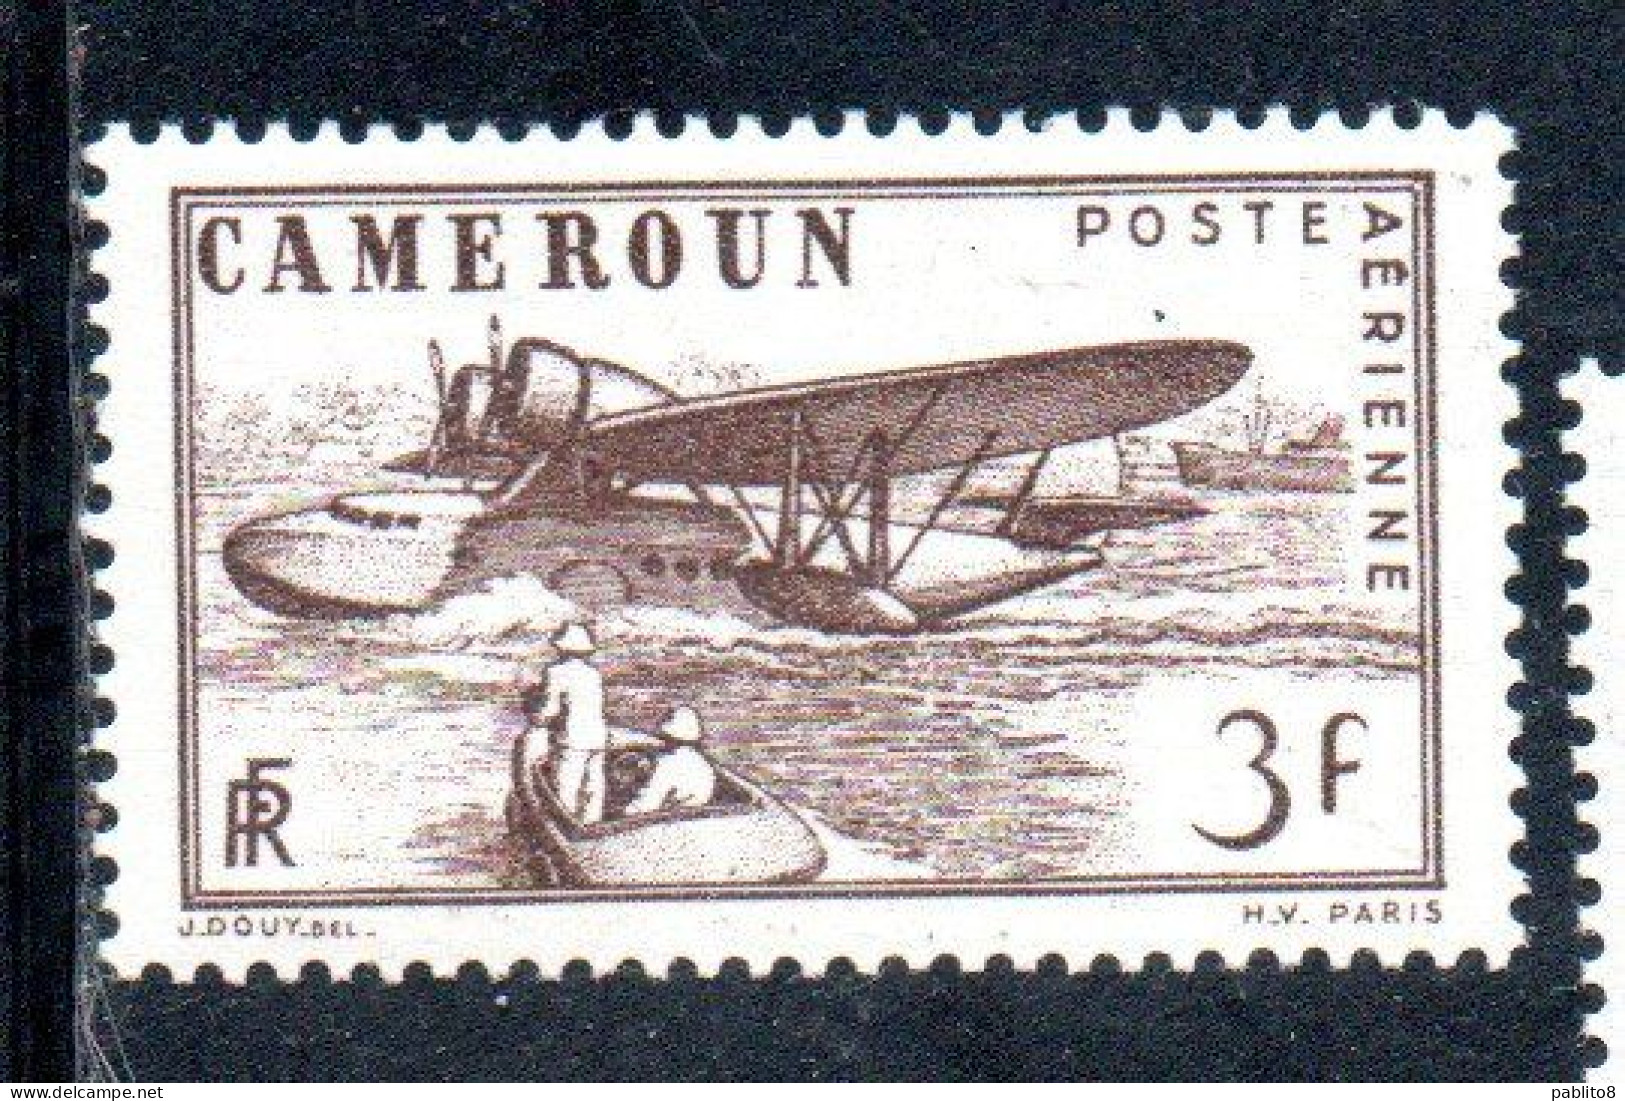 CAMEROUN CAMERUN 1943 1944 AIR POST MAIL AIRMAIL POSTA AEREA POST AERIENNE SEAPLANE ALIGHTING 3fr MNH - Poste Aérienne